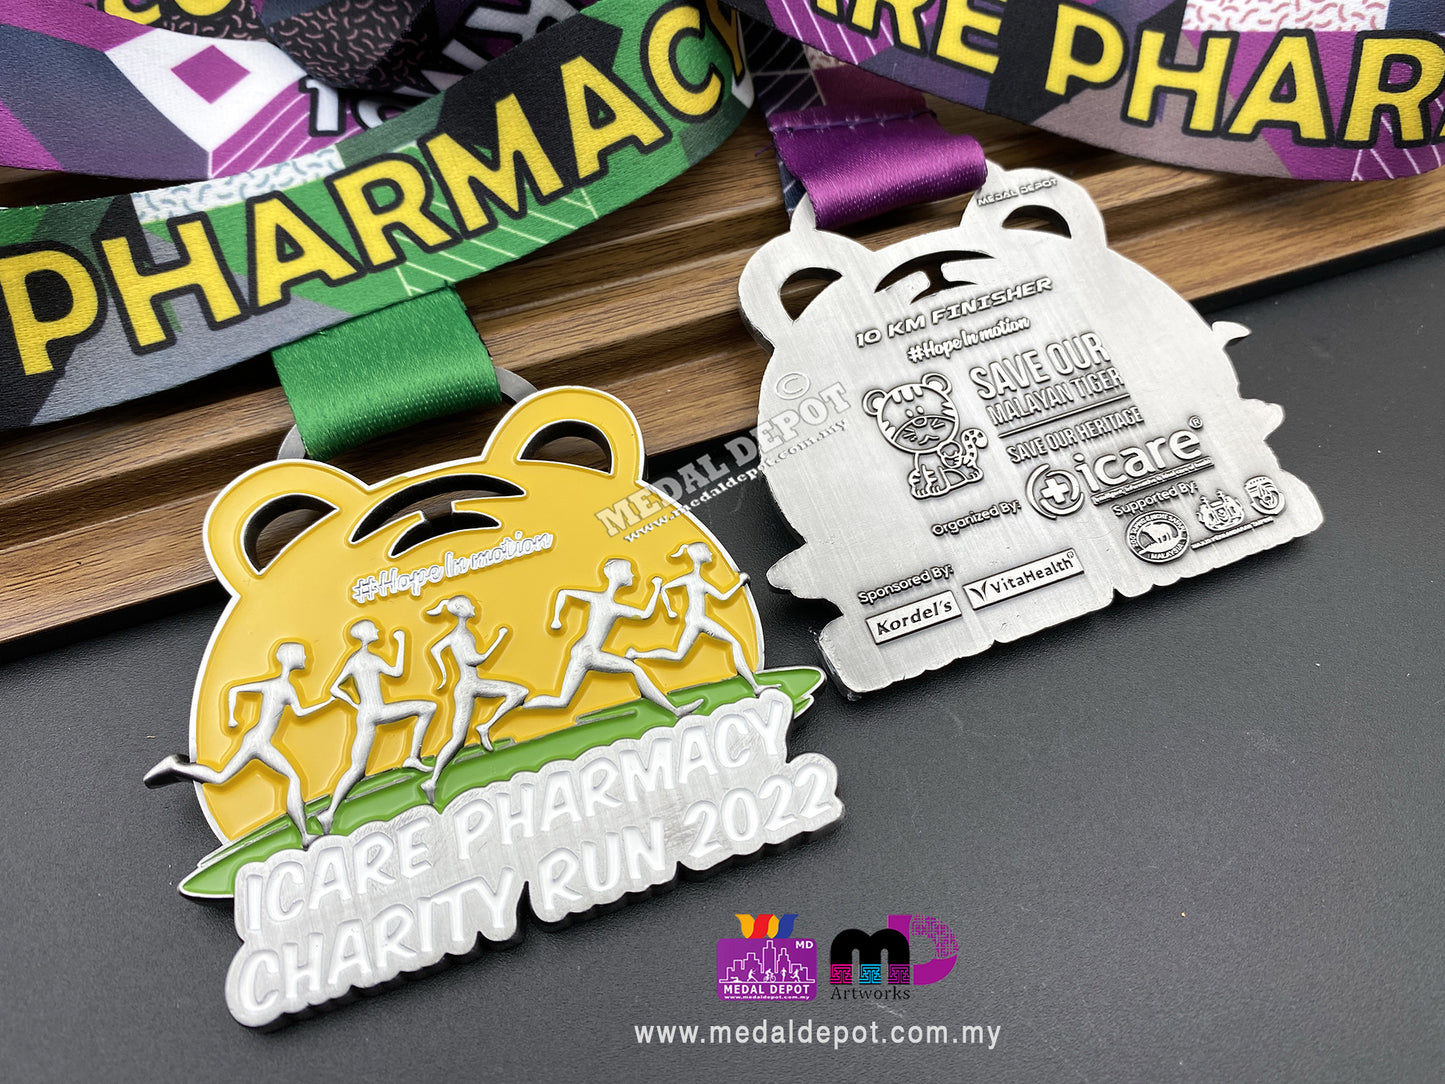 Icare Pharmacy Charity Run 2022 medal